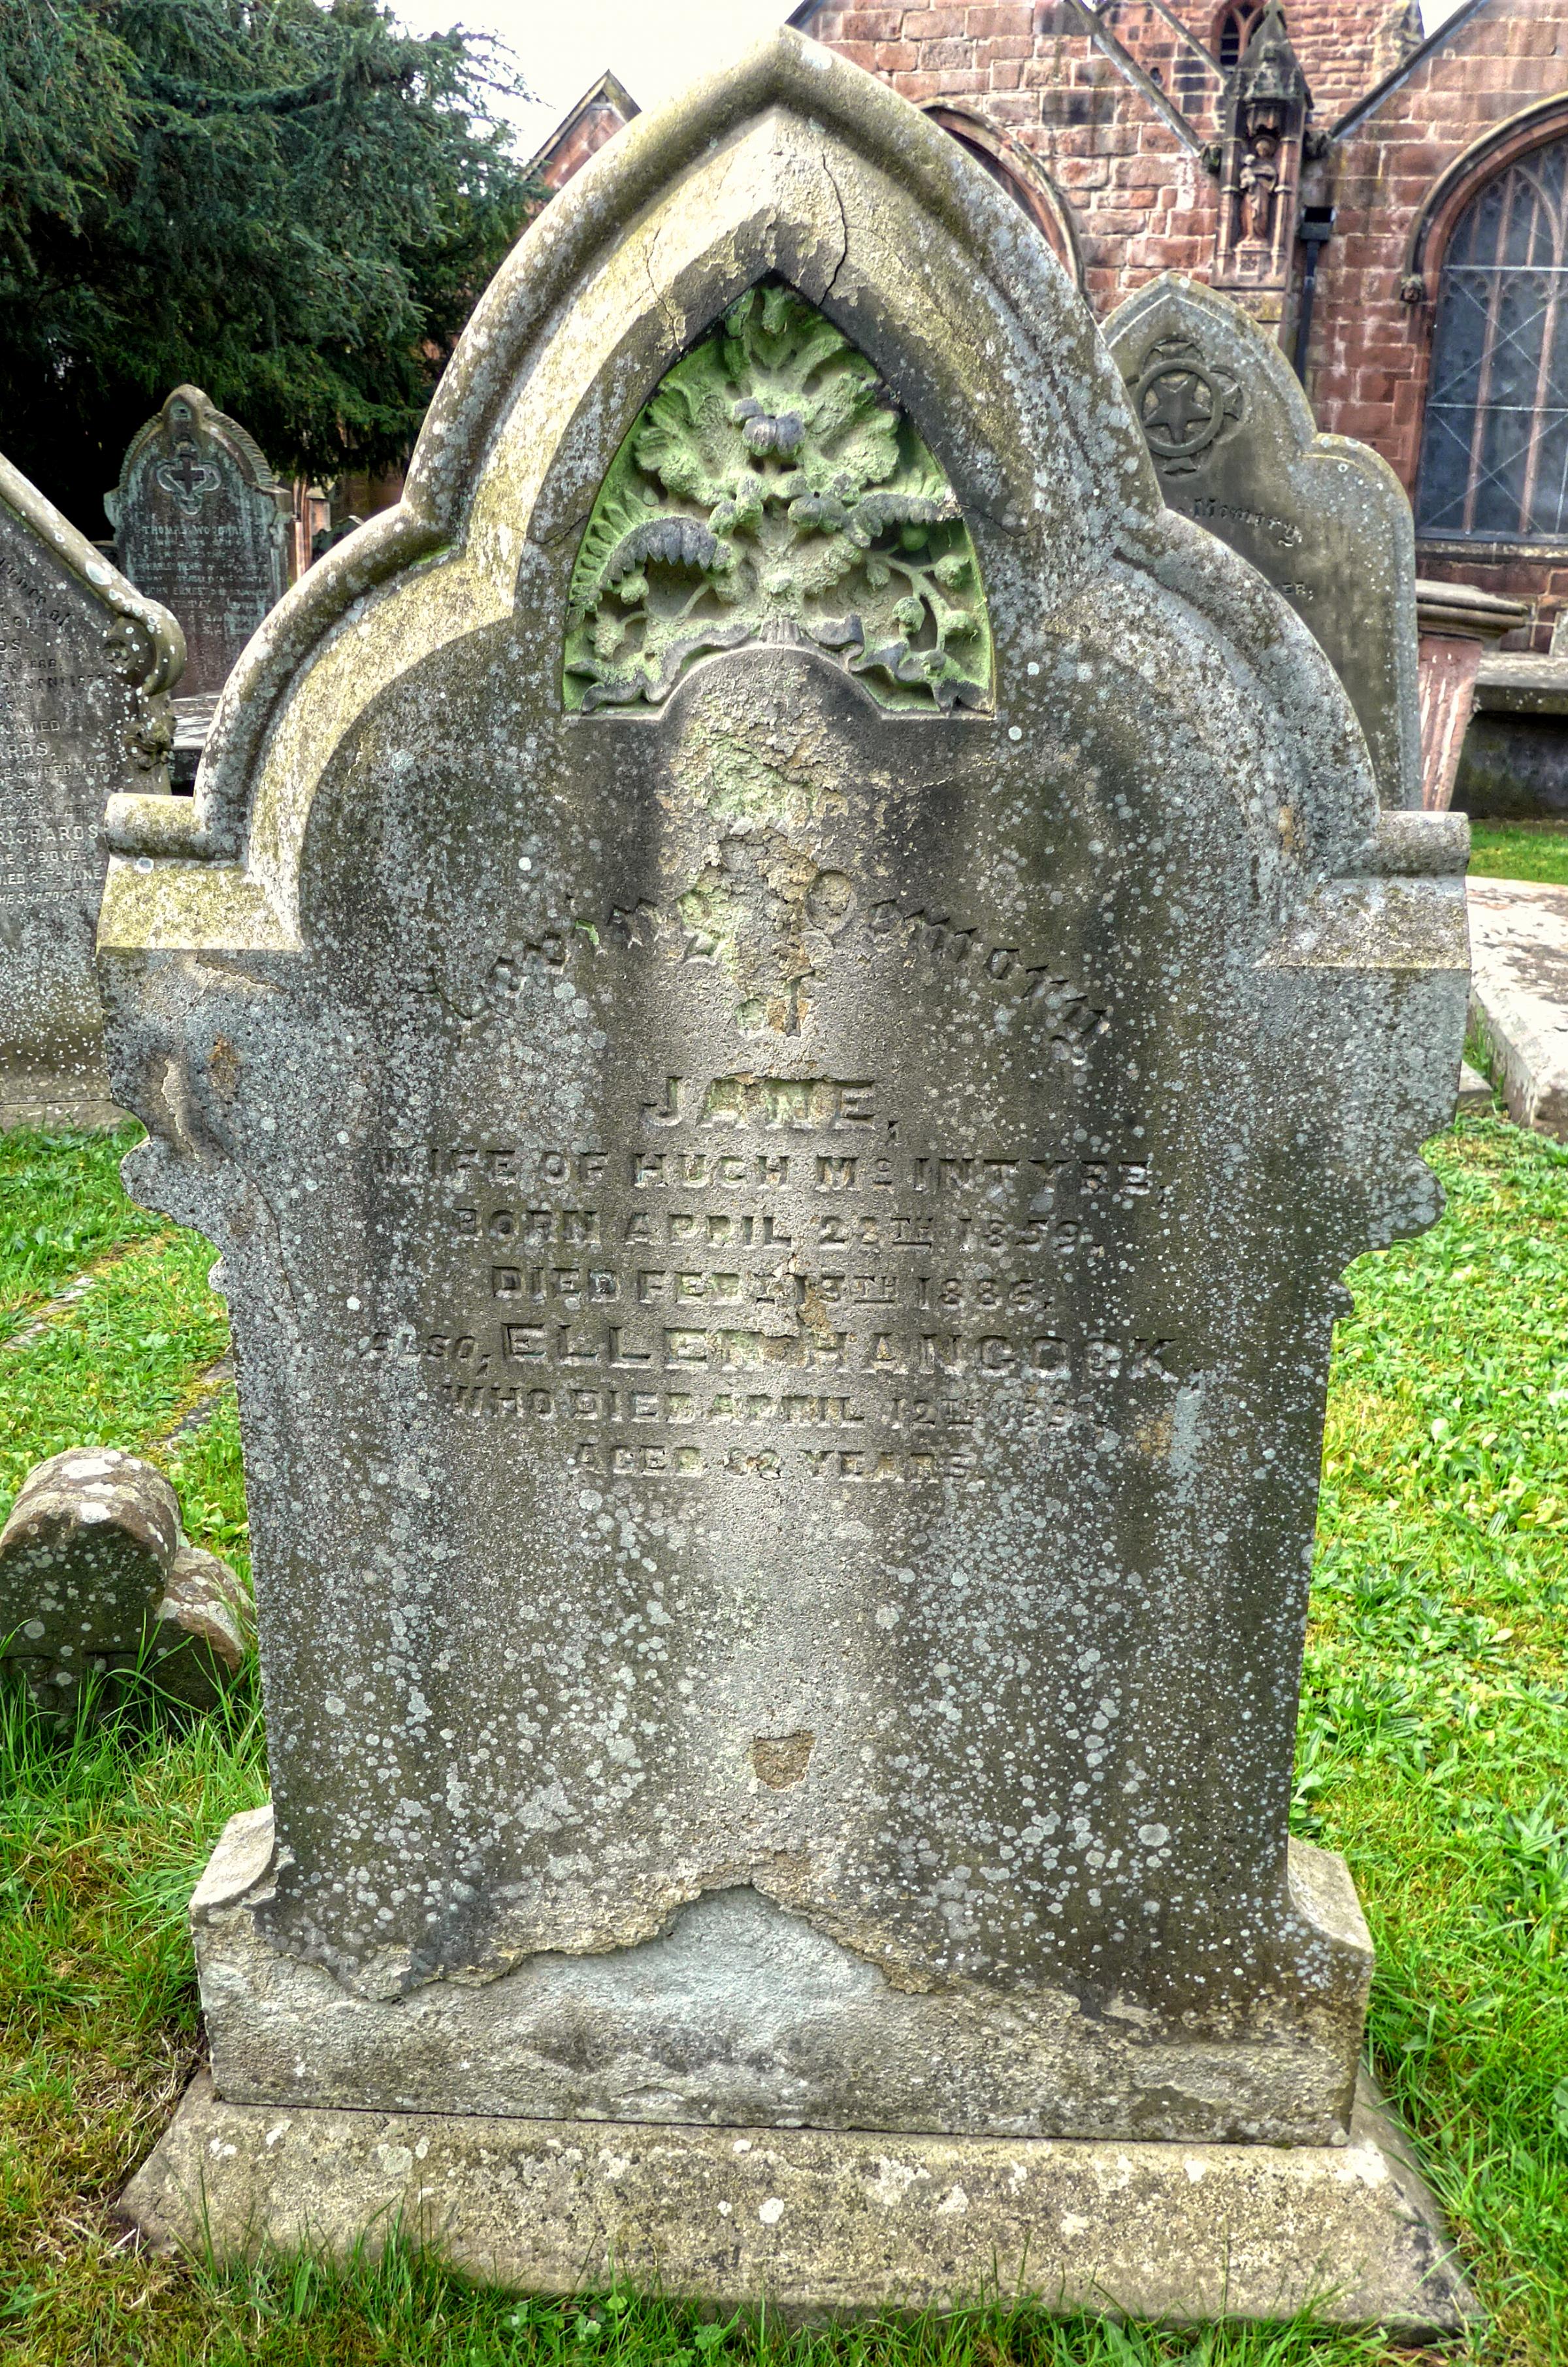 Jane McIntyres headstone in Eastham Churchyard